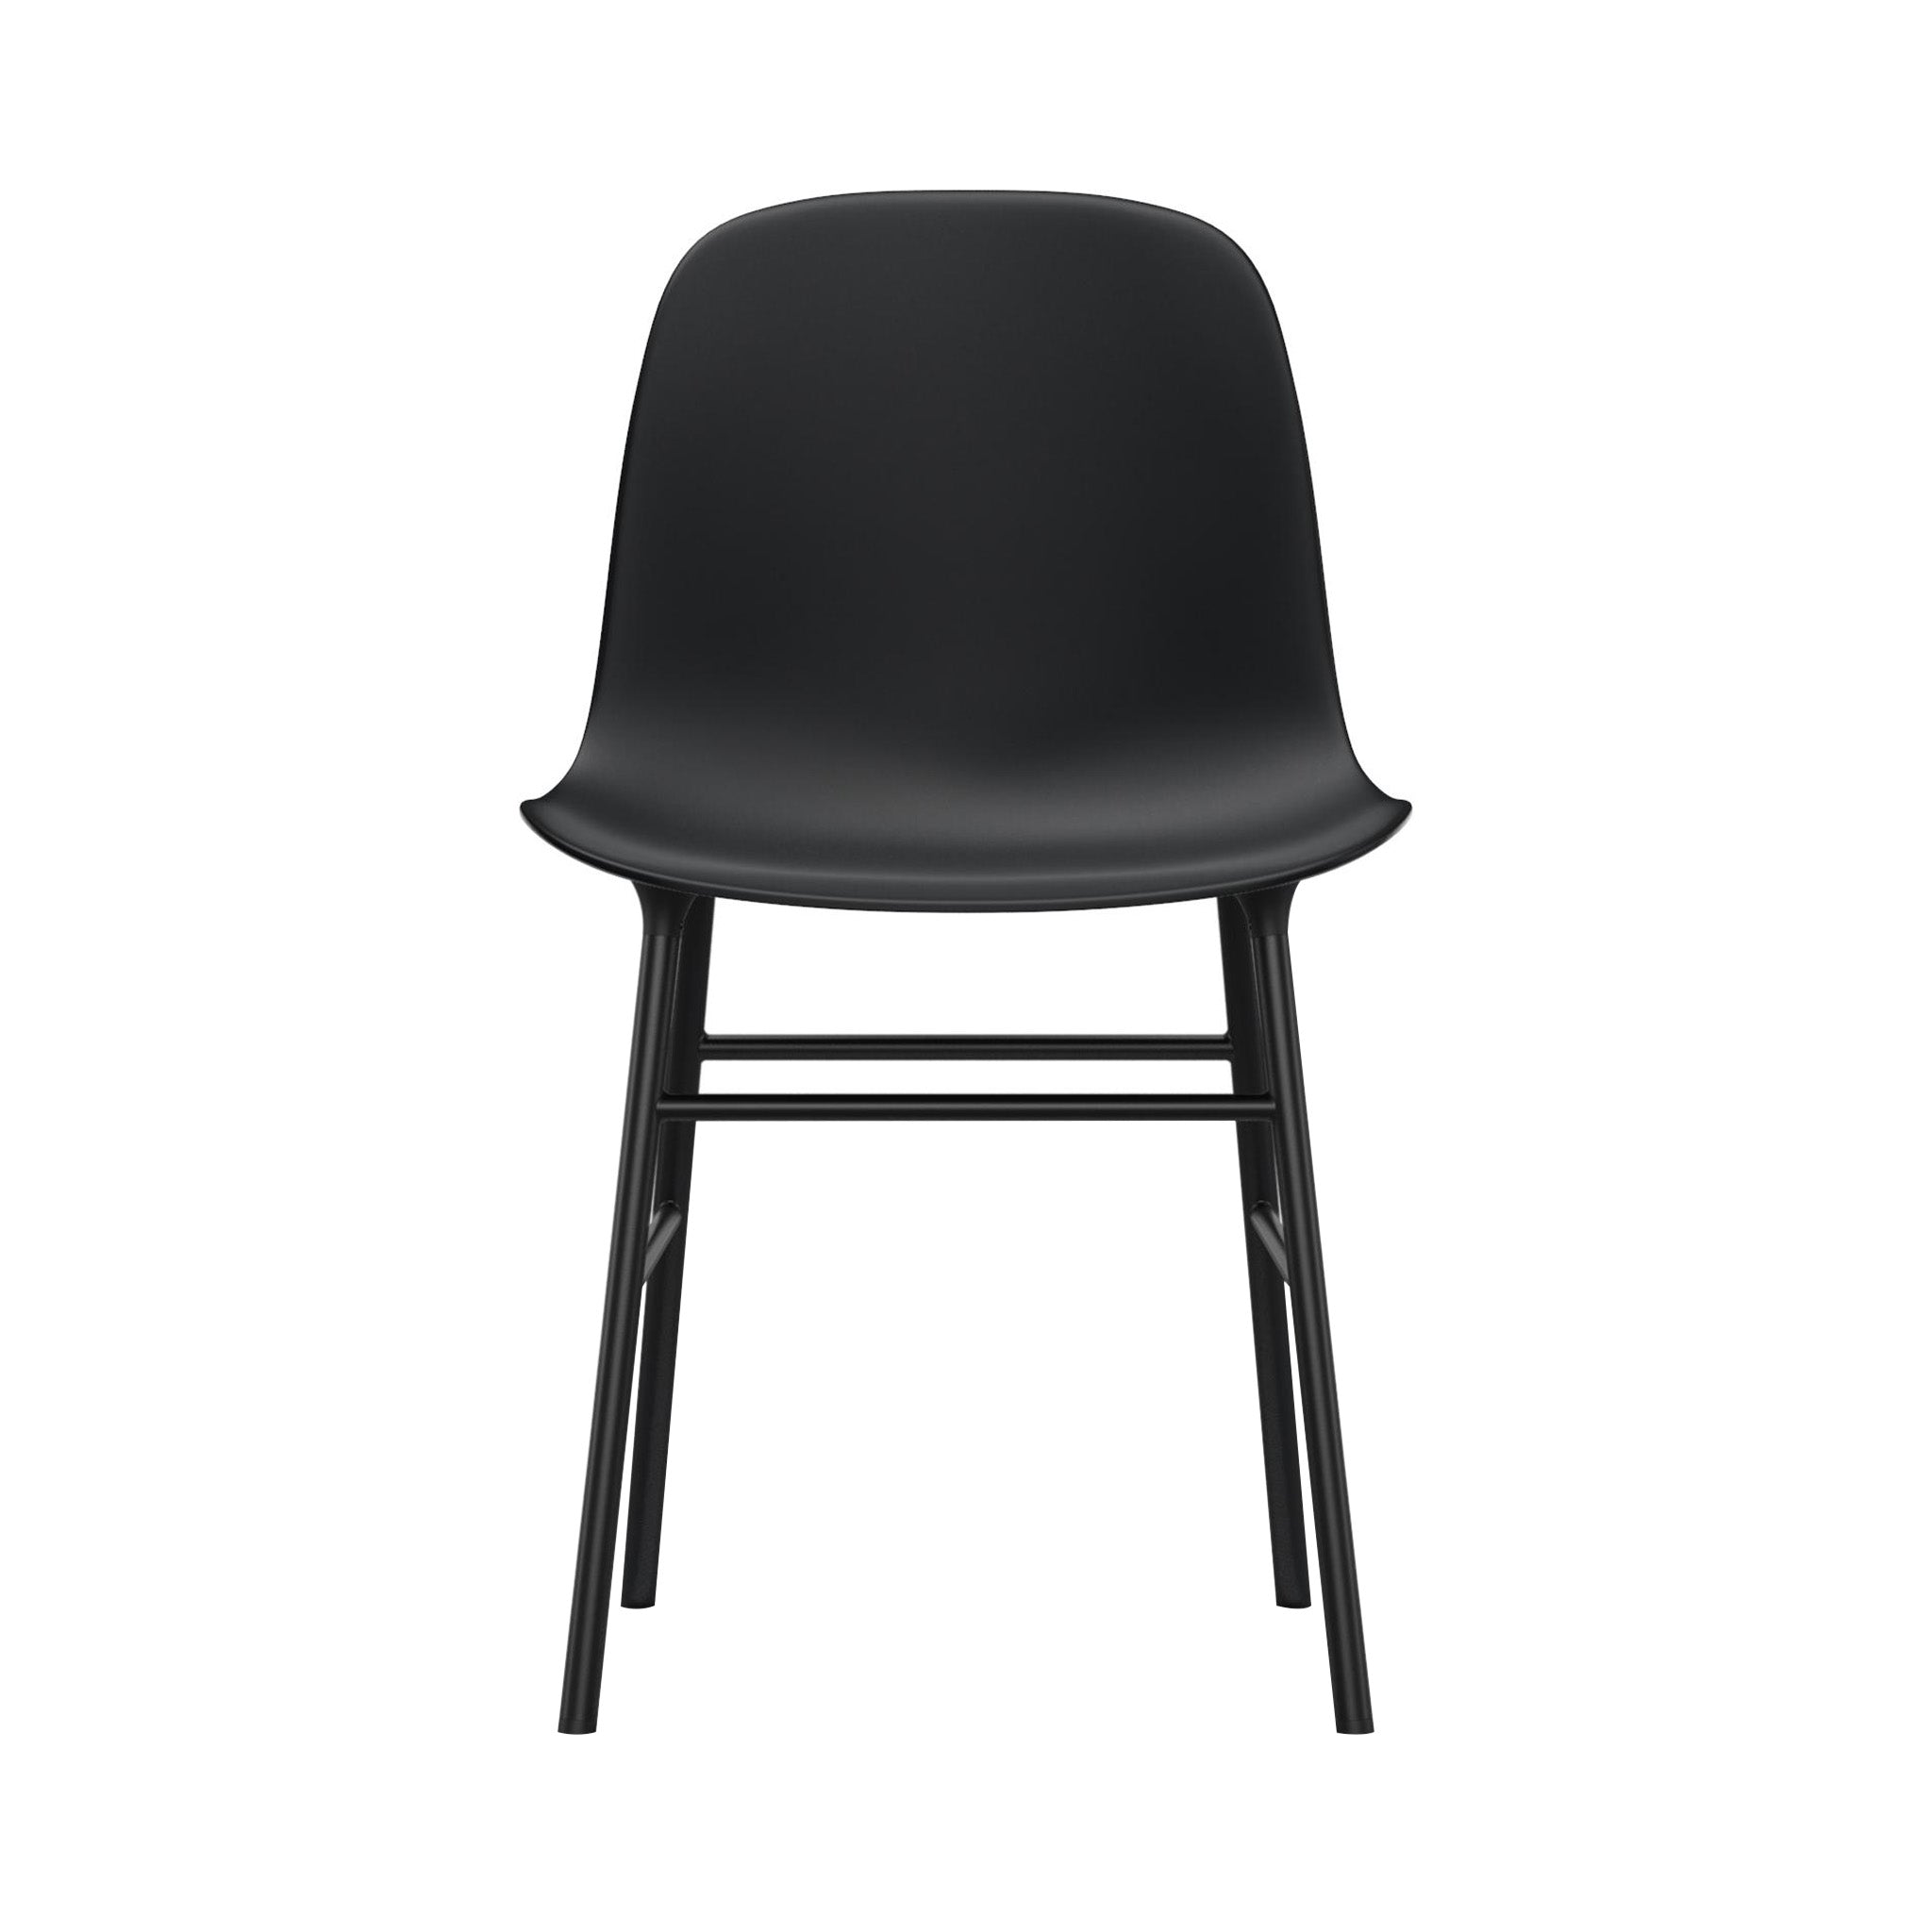 Form Chair: Steel + Black